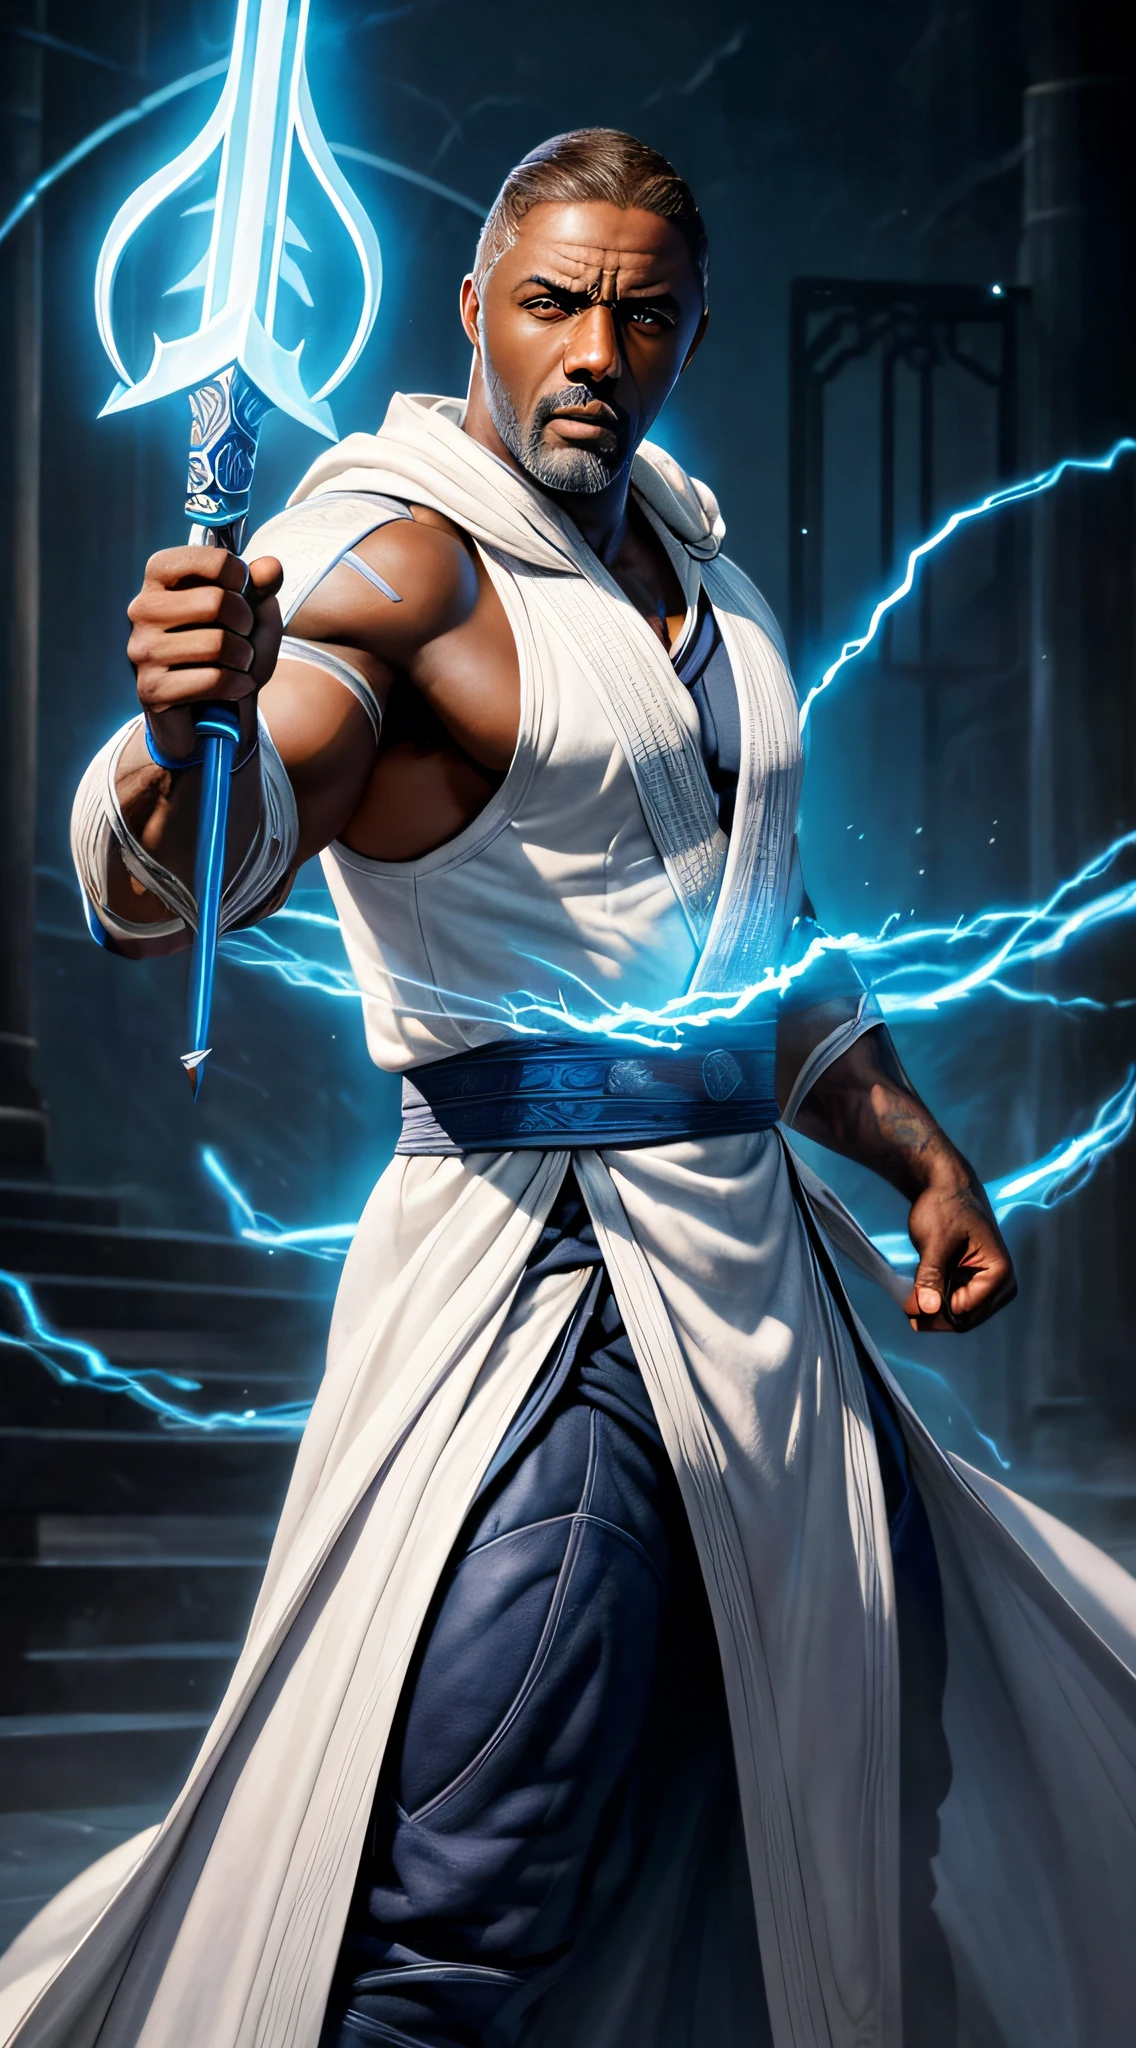 actor ((Idris Elba)) as Raiden, Mortal Kombat, wears white robe, a vietnamese hat, glowing blue eyes, wields staff, God of Thunder, protector of Earthrealm, intricate, high detail, sharp focus, dramatic, photorealistic painting art by greg rutkowski